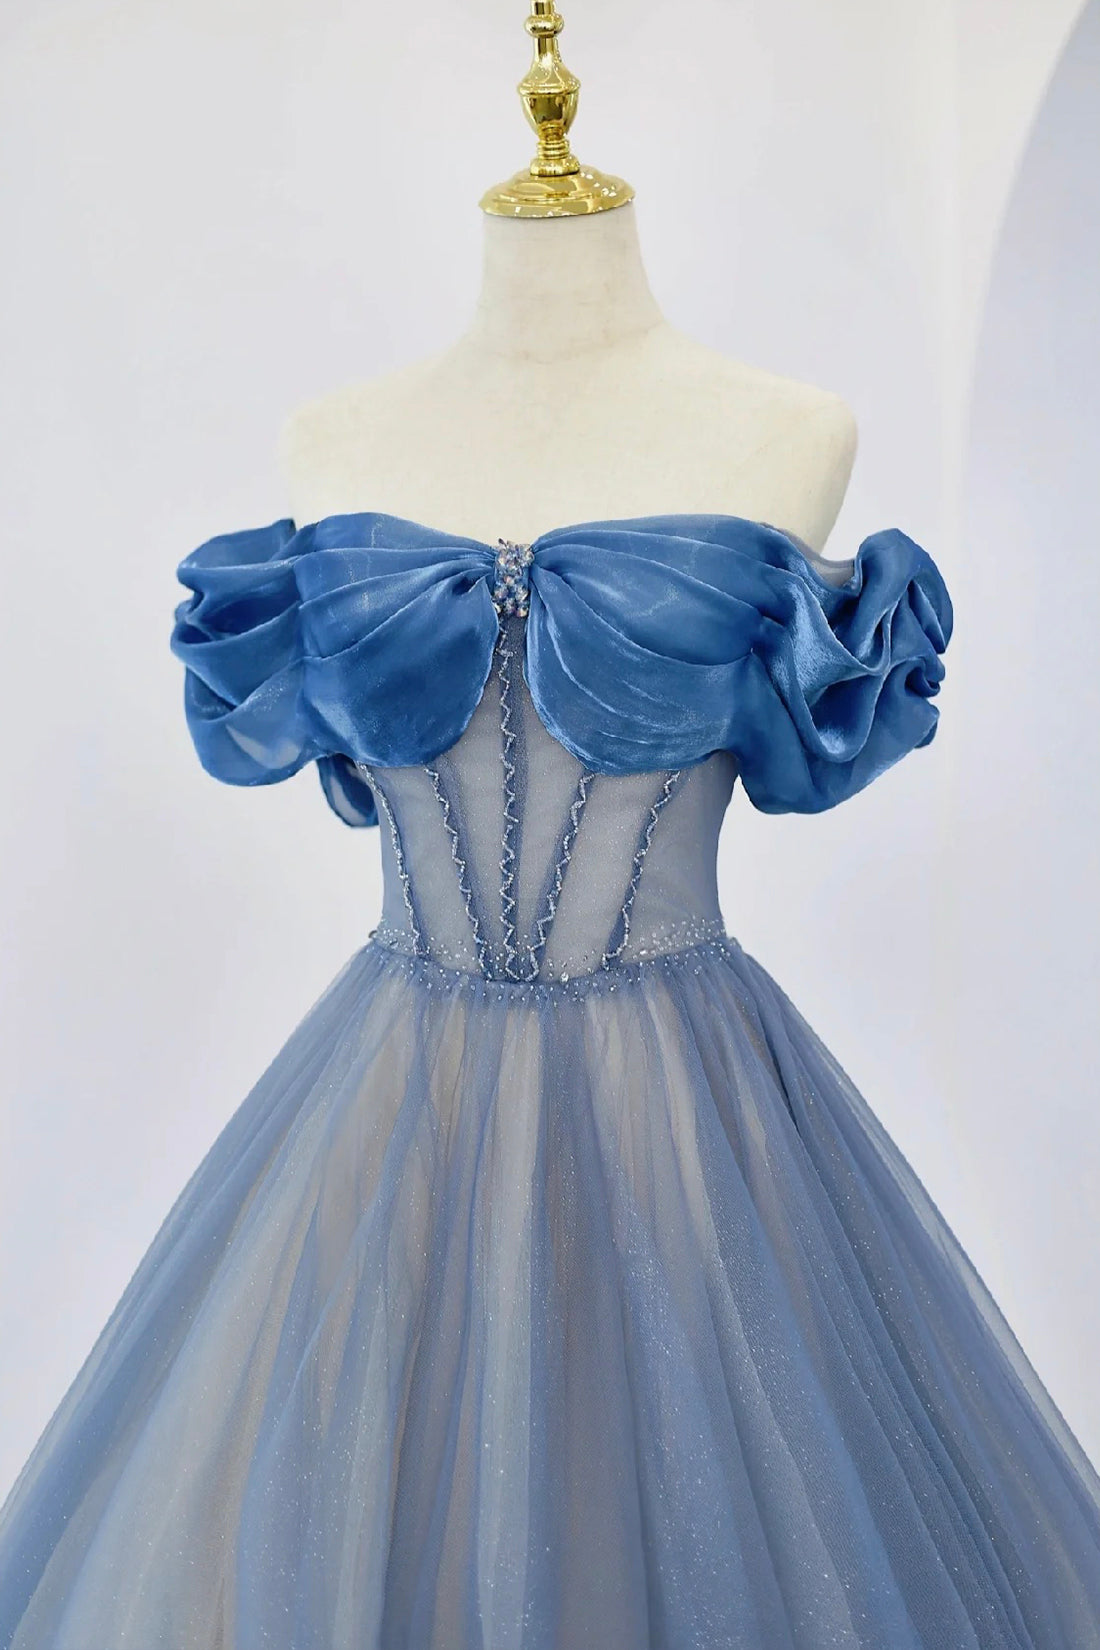 Blue Tulle Beaded Floor Length A-Line Prom Dress, Elegant Off the Shoulder Evening Party Dress